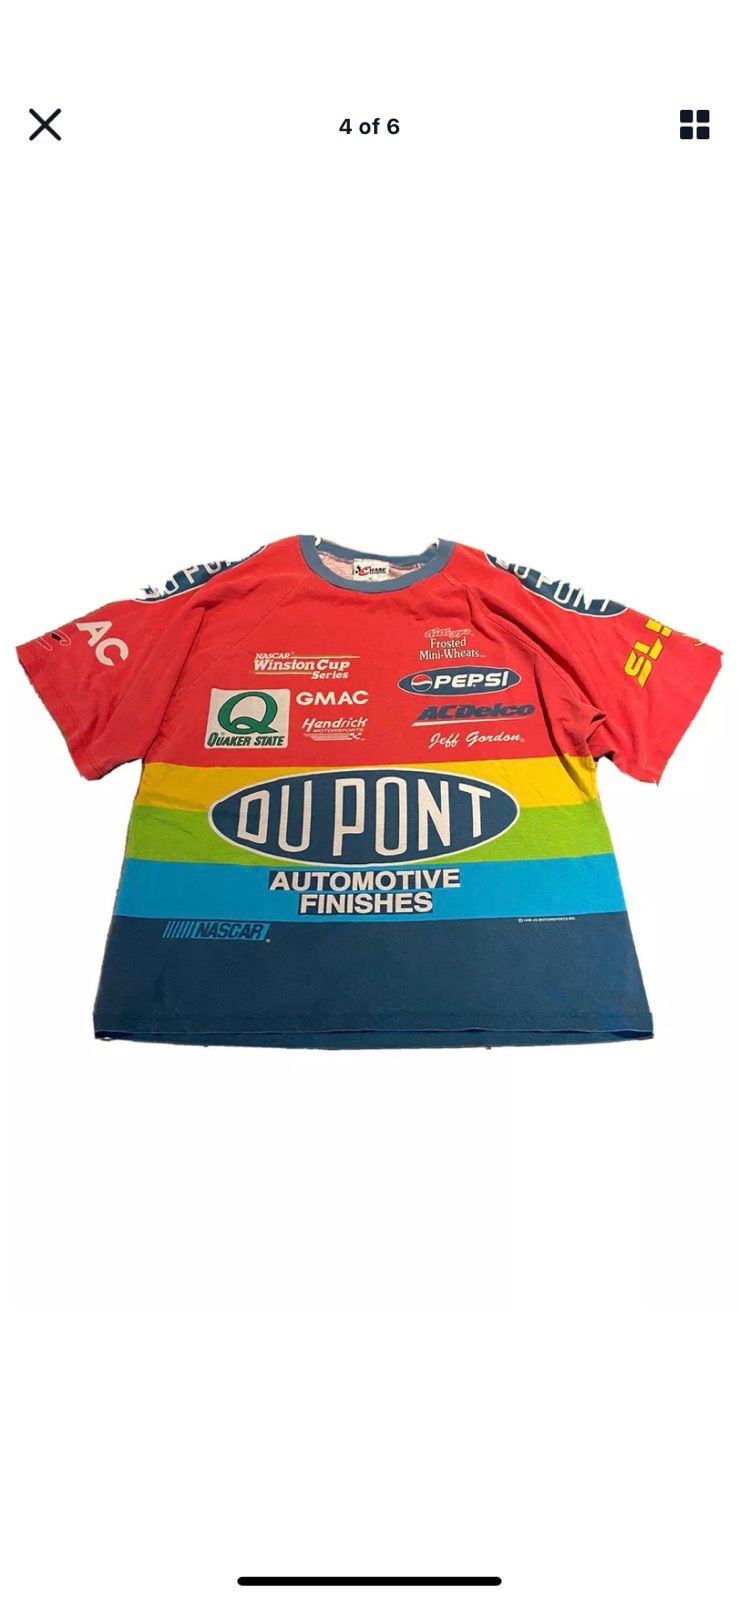 Chase Authentics Vintage 1998 Jeff Gordon 24 Dupont NASCAR Pit Crew Tshirt XL Size US XL / EU 56 / 4 - 1 Preview